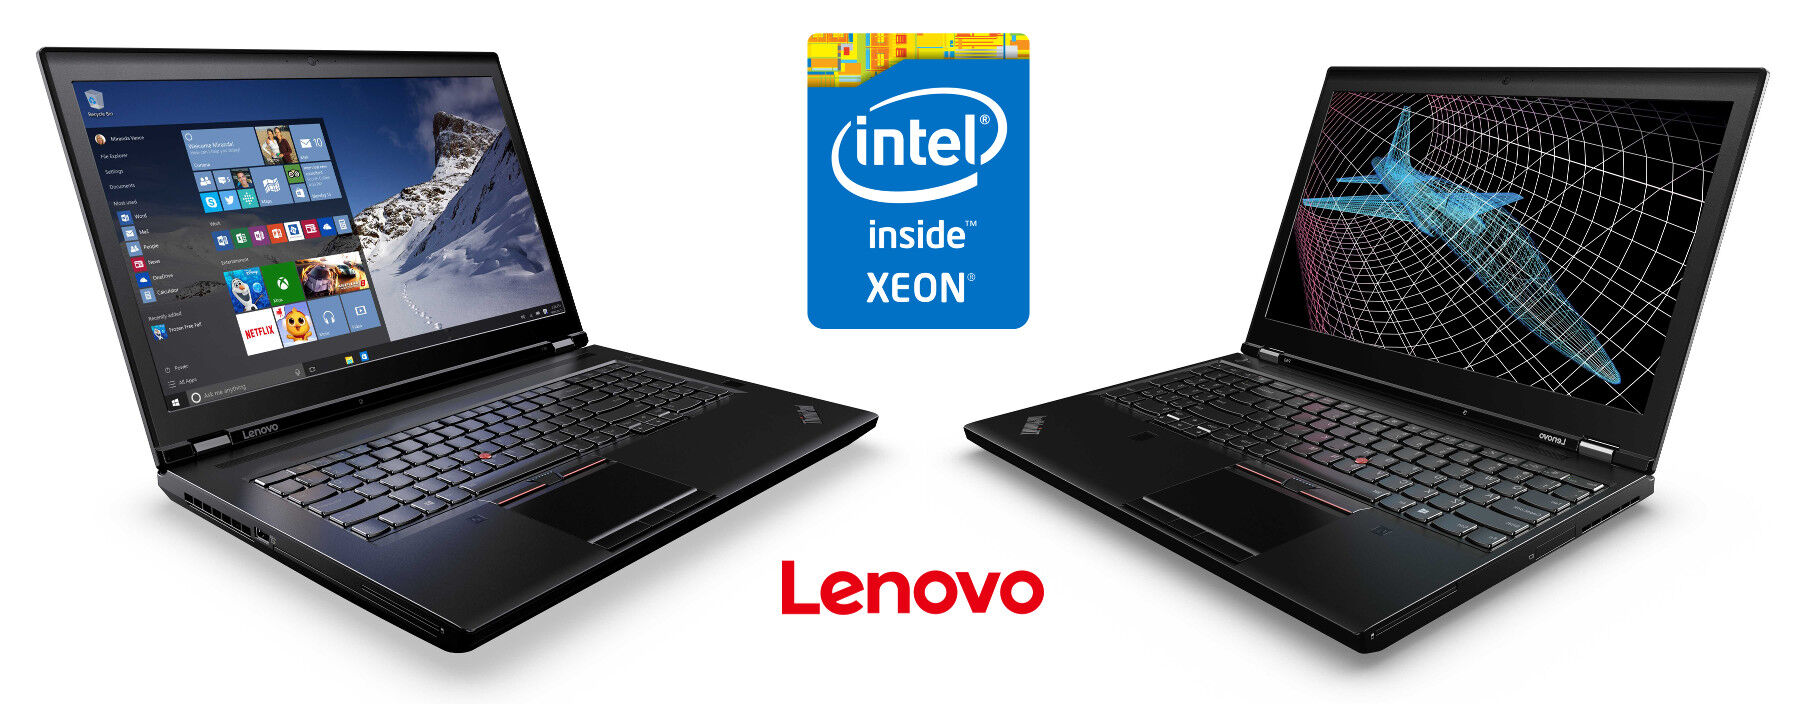 Lenovo announces workstation laptops based on mobile Intel Xeon processors 18